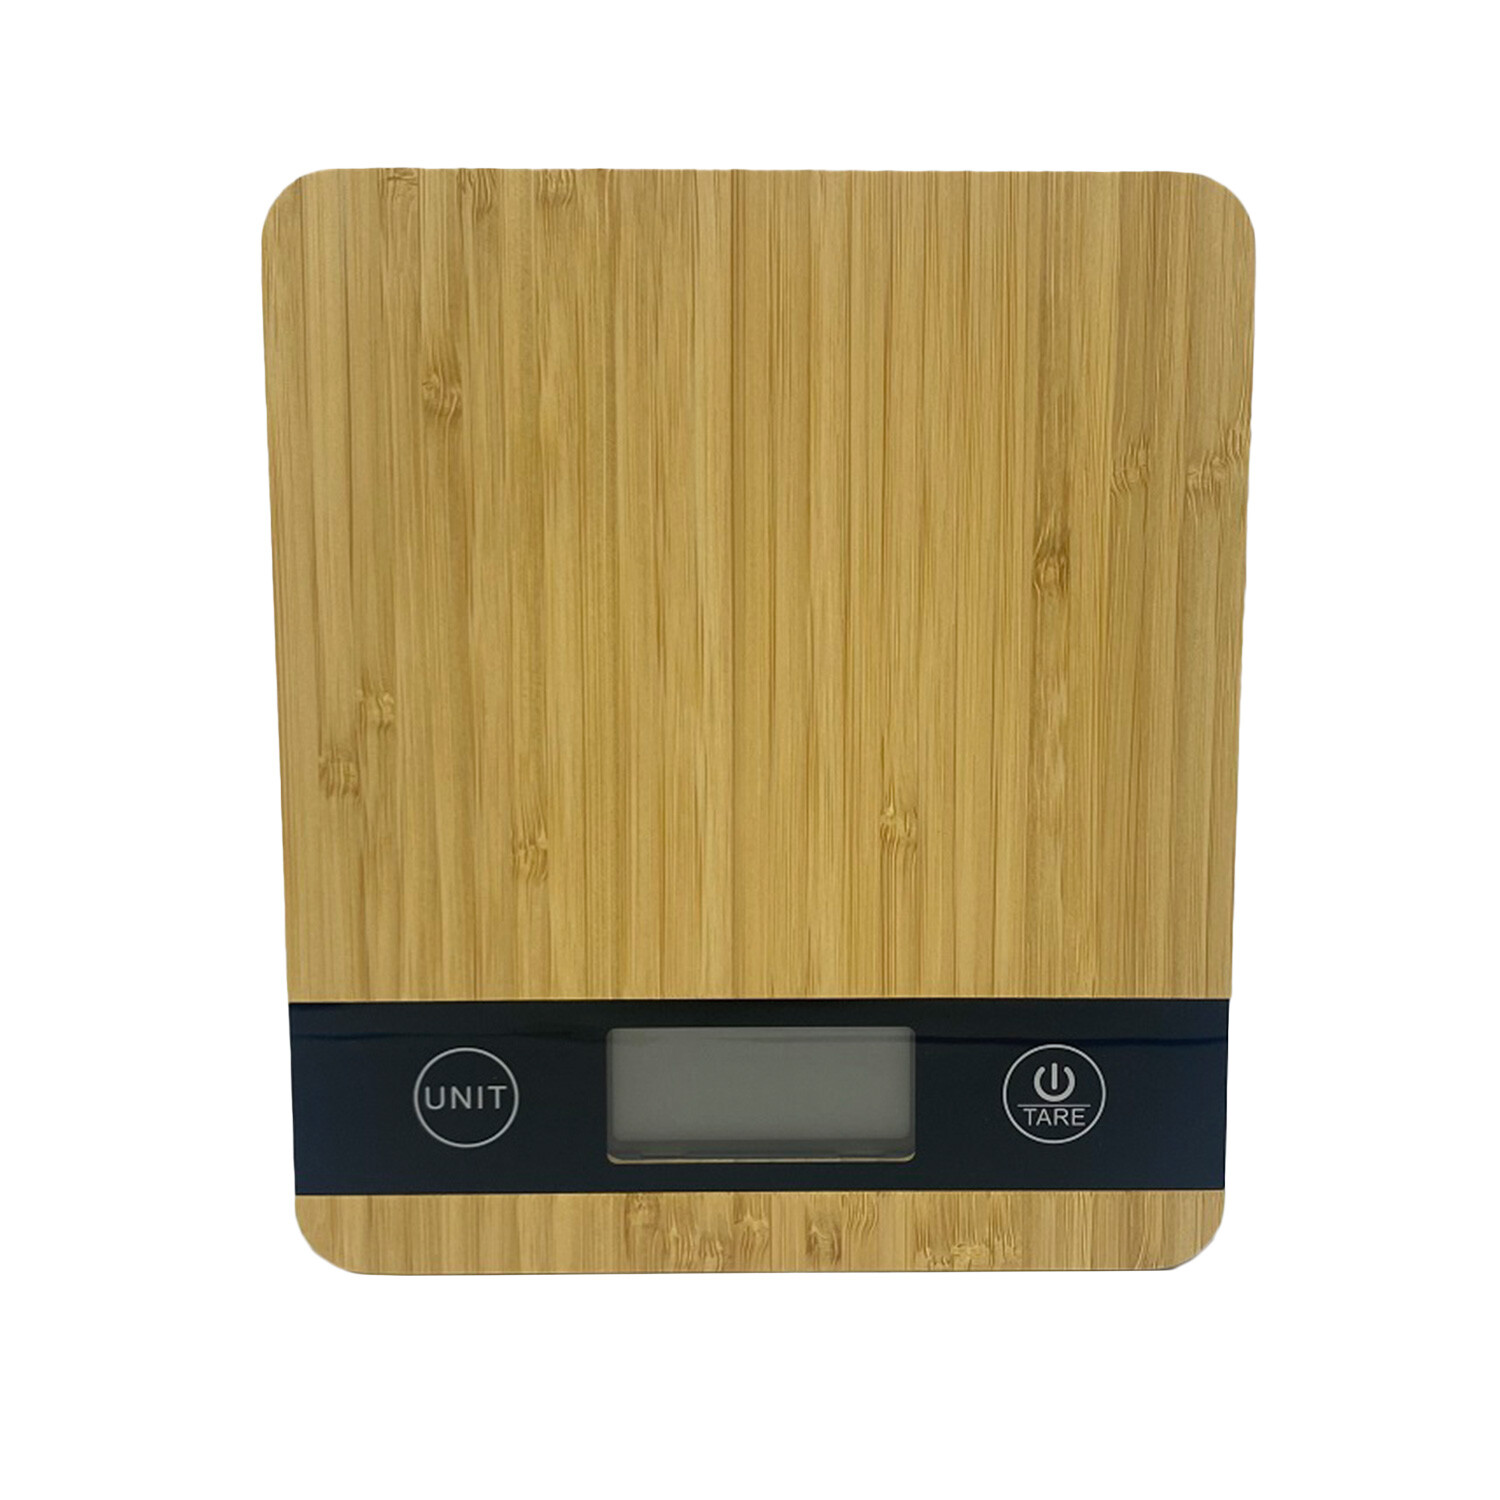 Bamboo Electronic Kitchen Scales - Wood Image 1